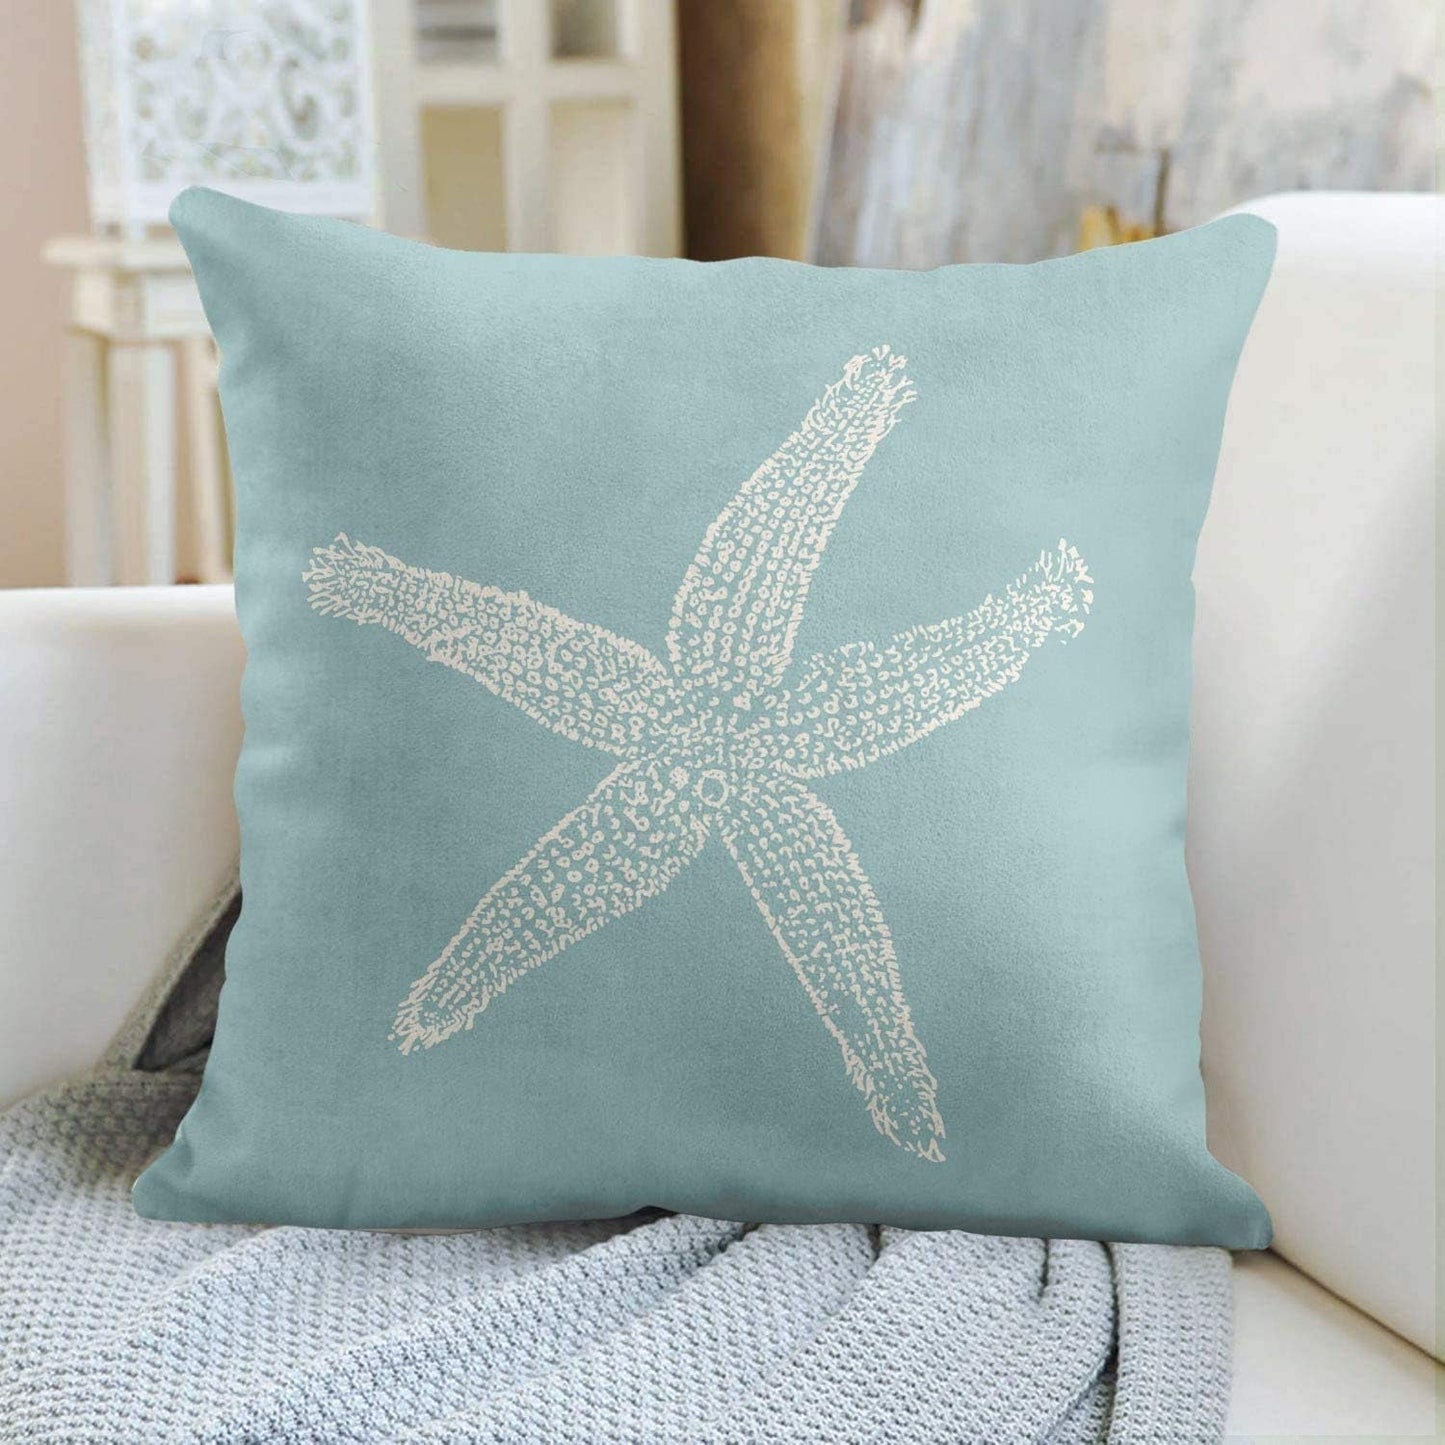 Emvency Throw Pillow Cover Green Star Vintage Starfish Pastel Seafoam Blue Fish Decorative Pillow Case Home Decor Square 26 X 26 Inch Pillowcase